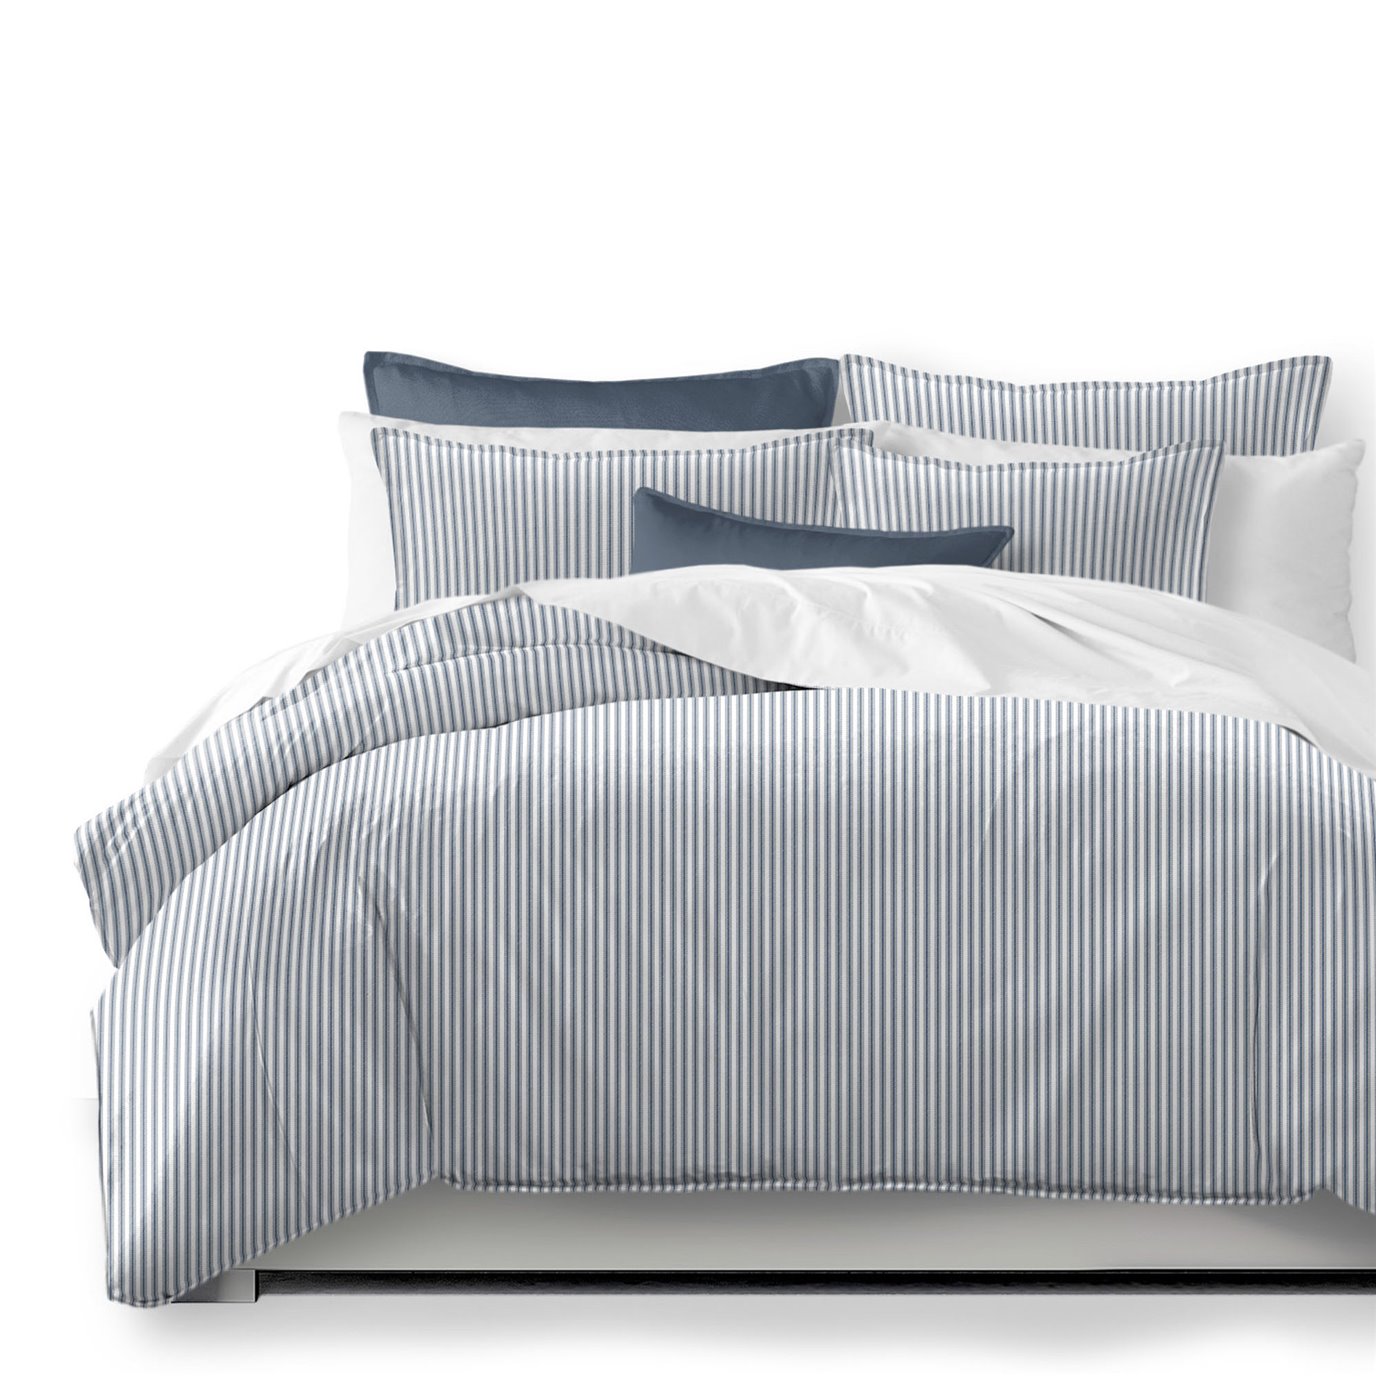 Cruz Ticking Stripes White/Navy Comforter and Pillow Sham(s) Set - Size King / California King